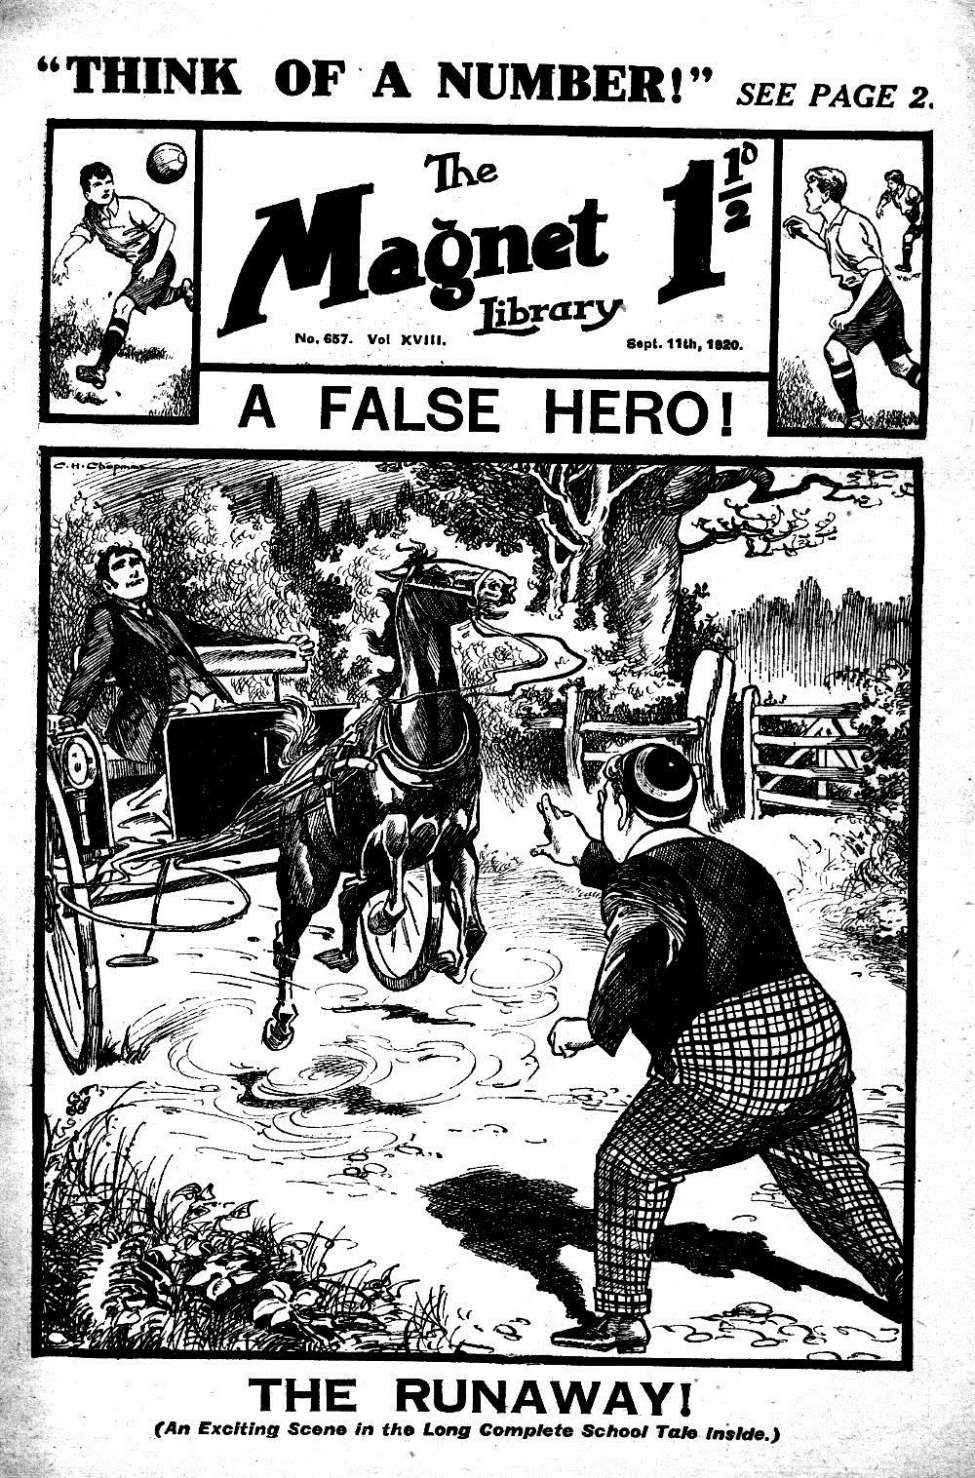 Book Cover For The Magnet 657 - A False Hero